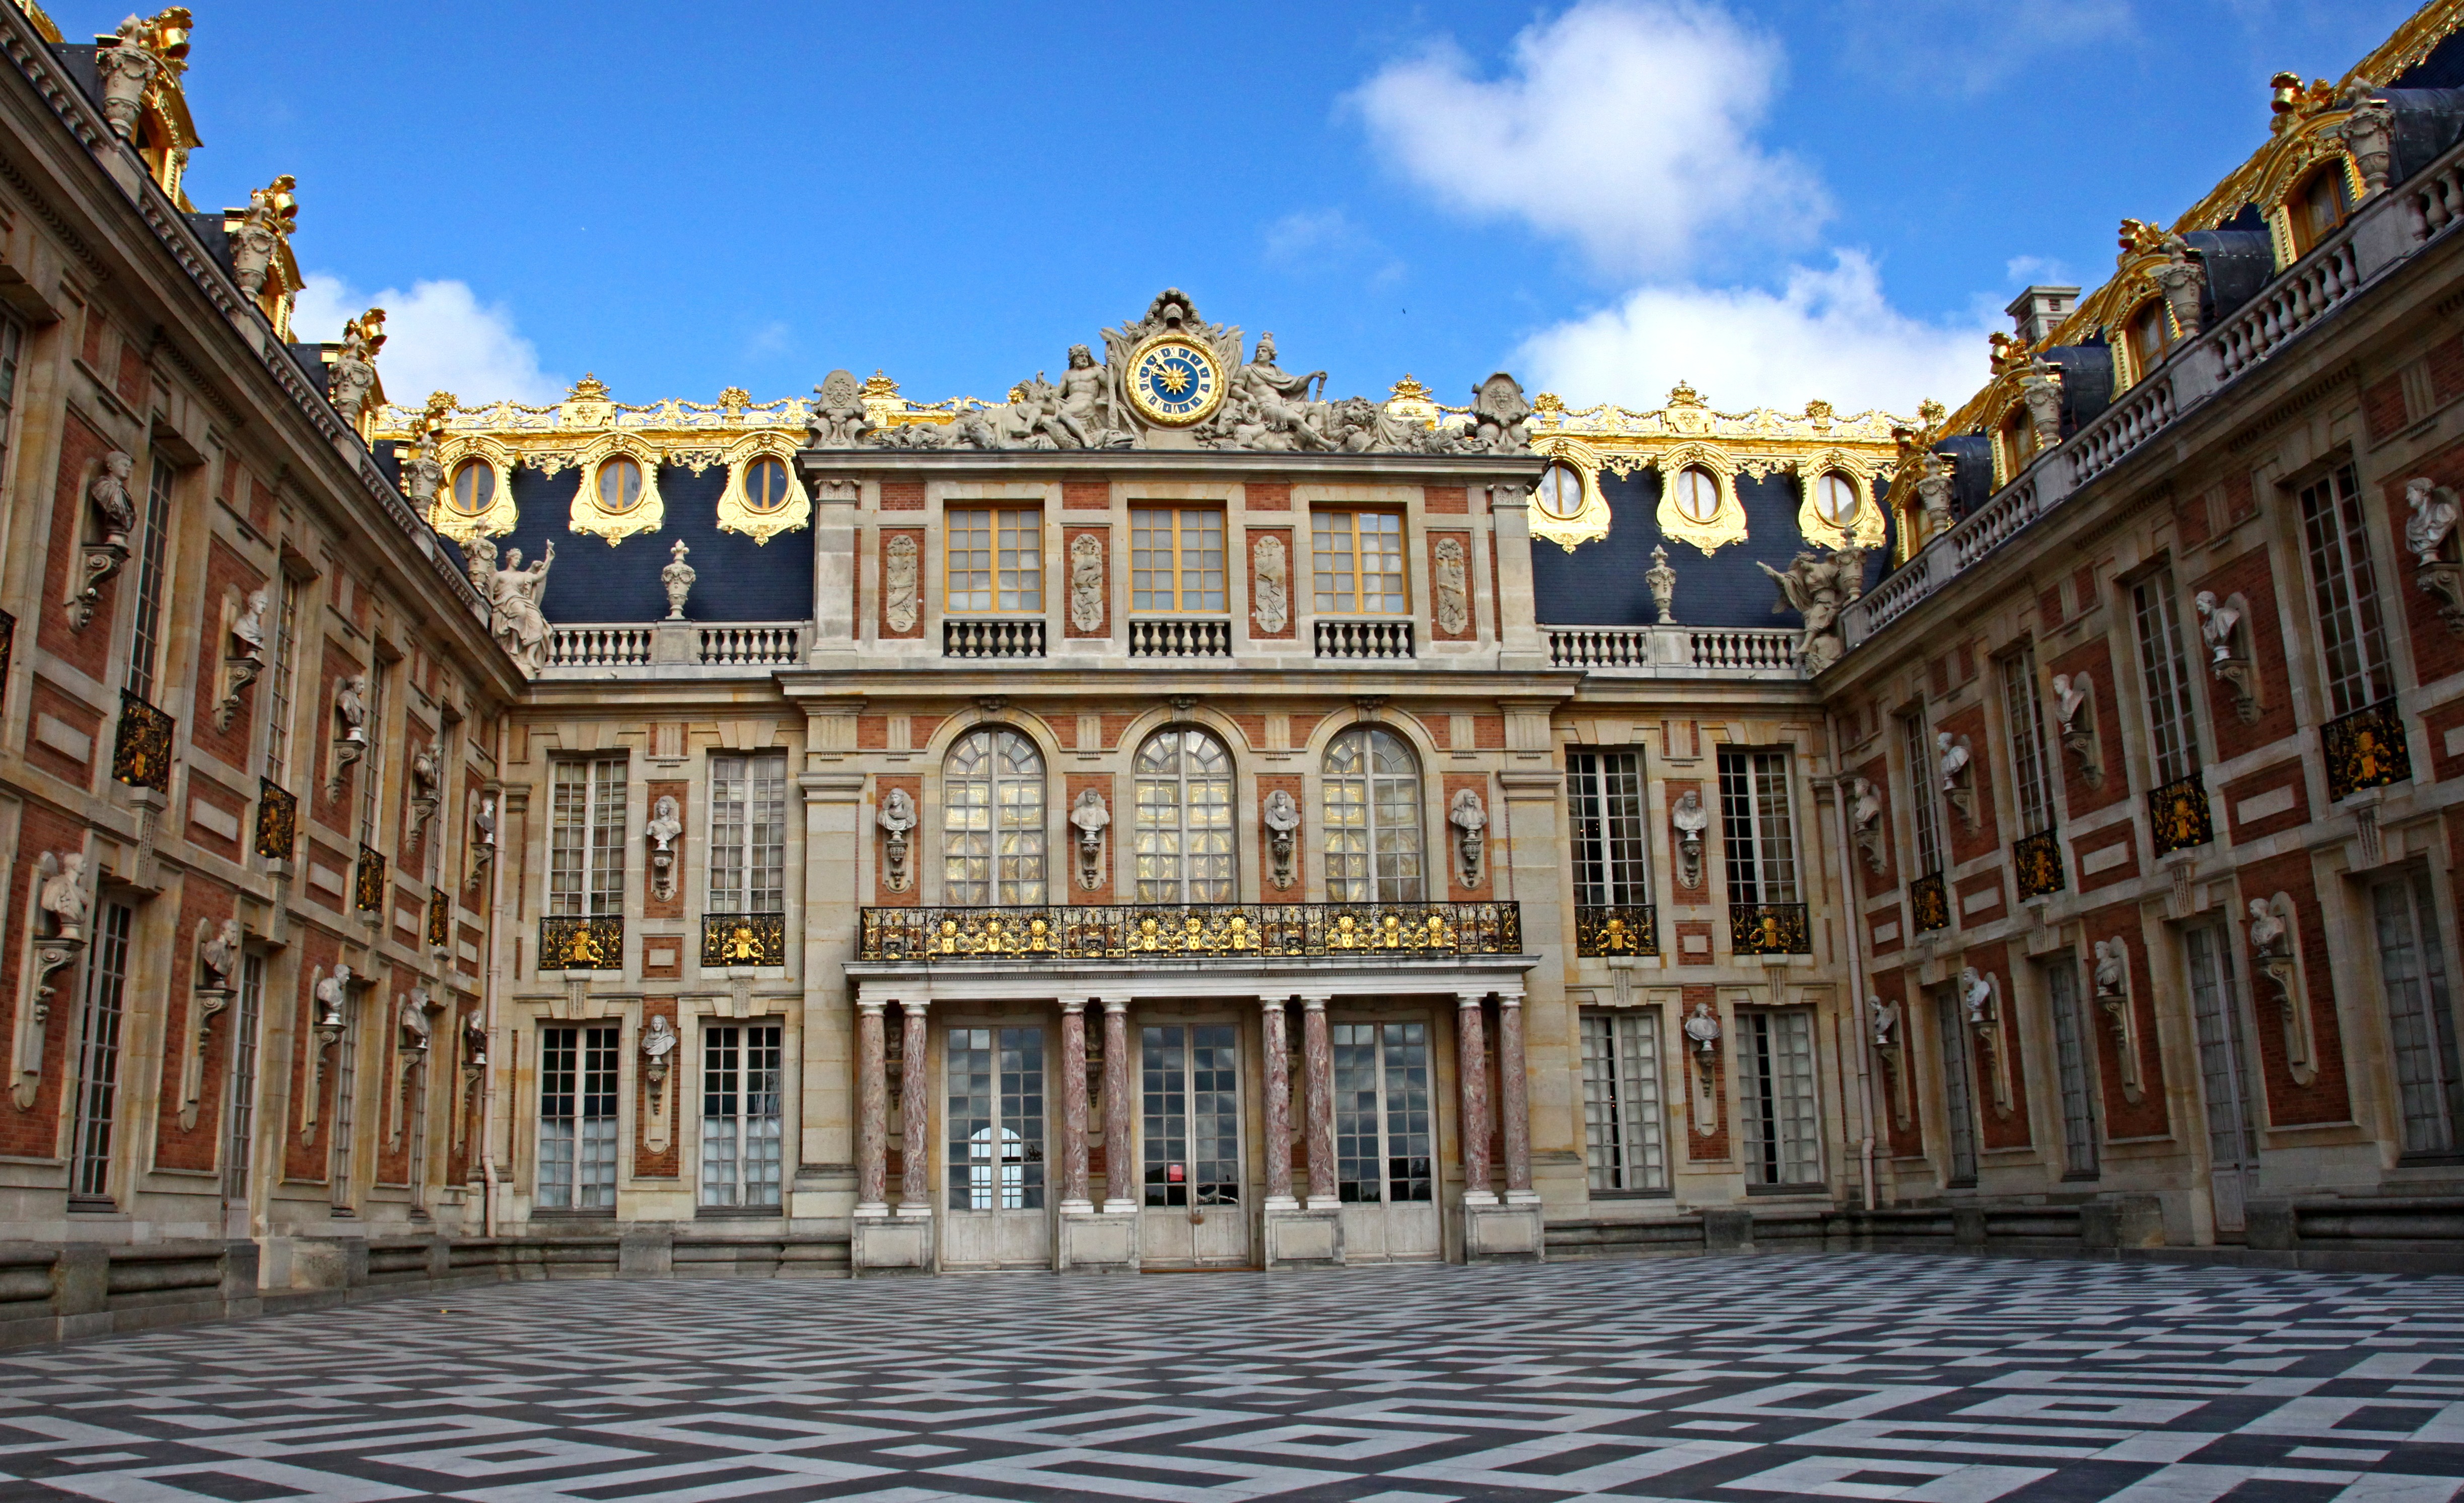 Время версаль. Людовик 14 Версаль. Версальский дворец во Франции Людовик 14. Версаль дворец Франция 18 век.